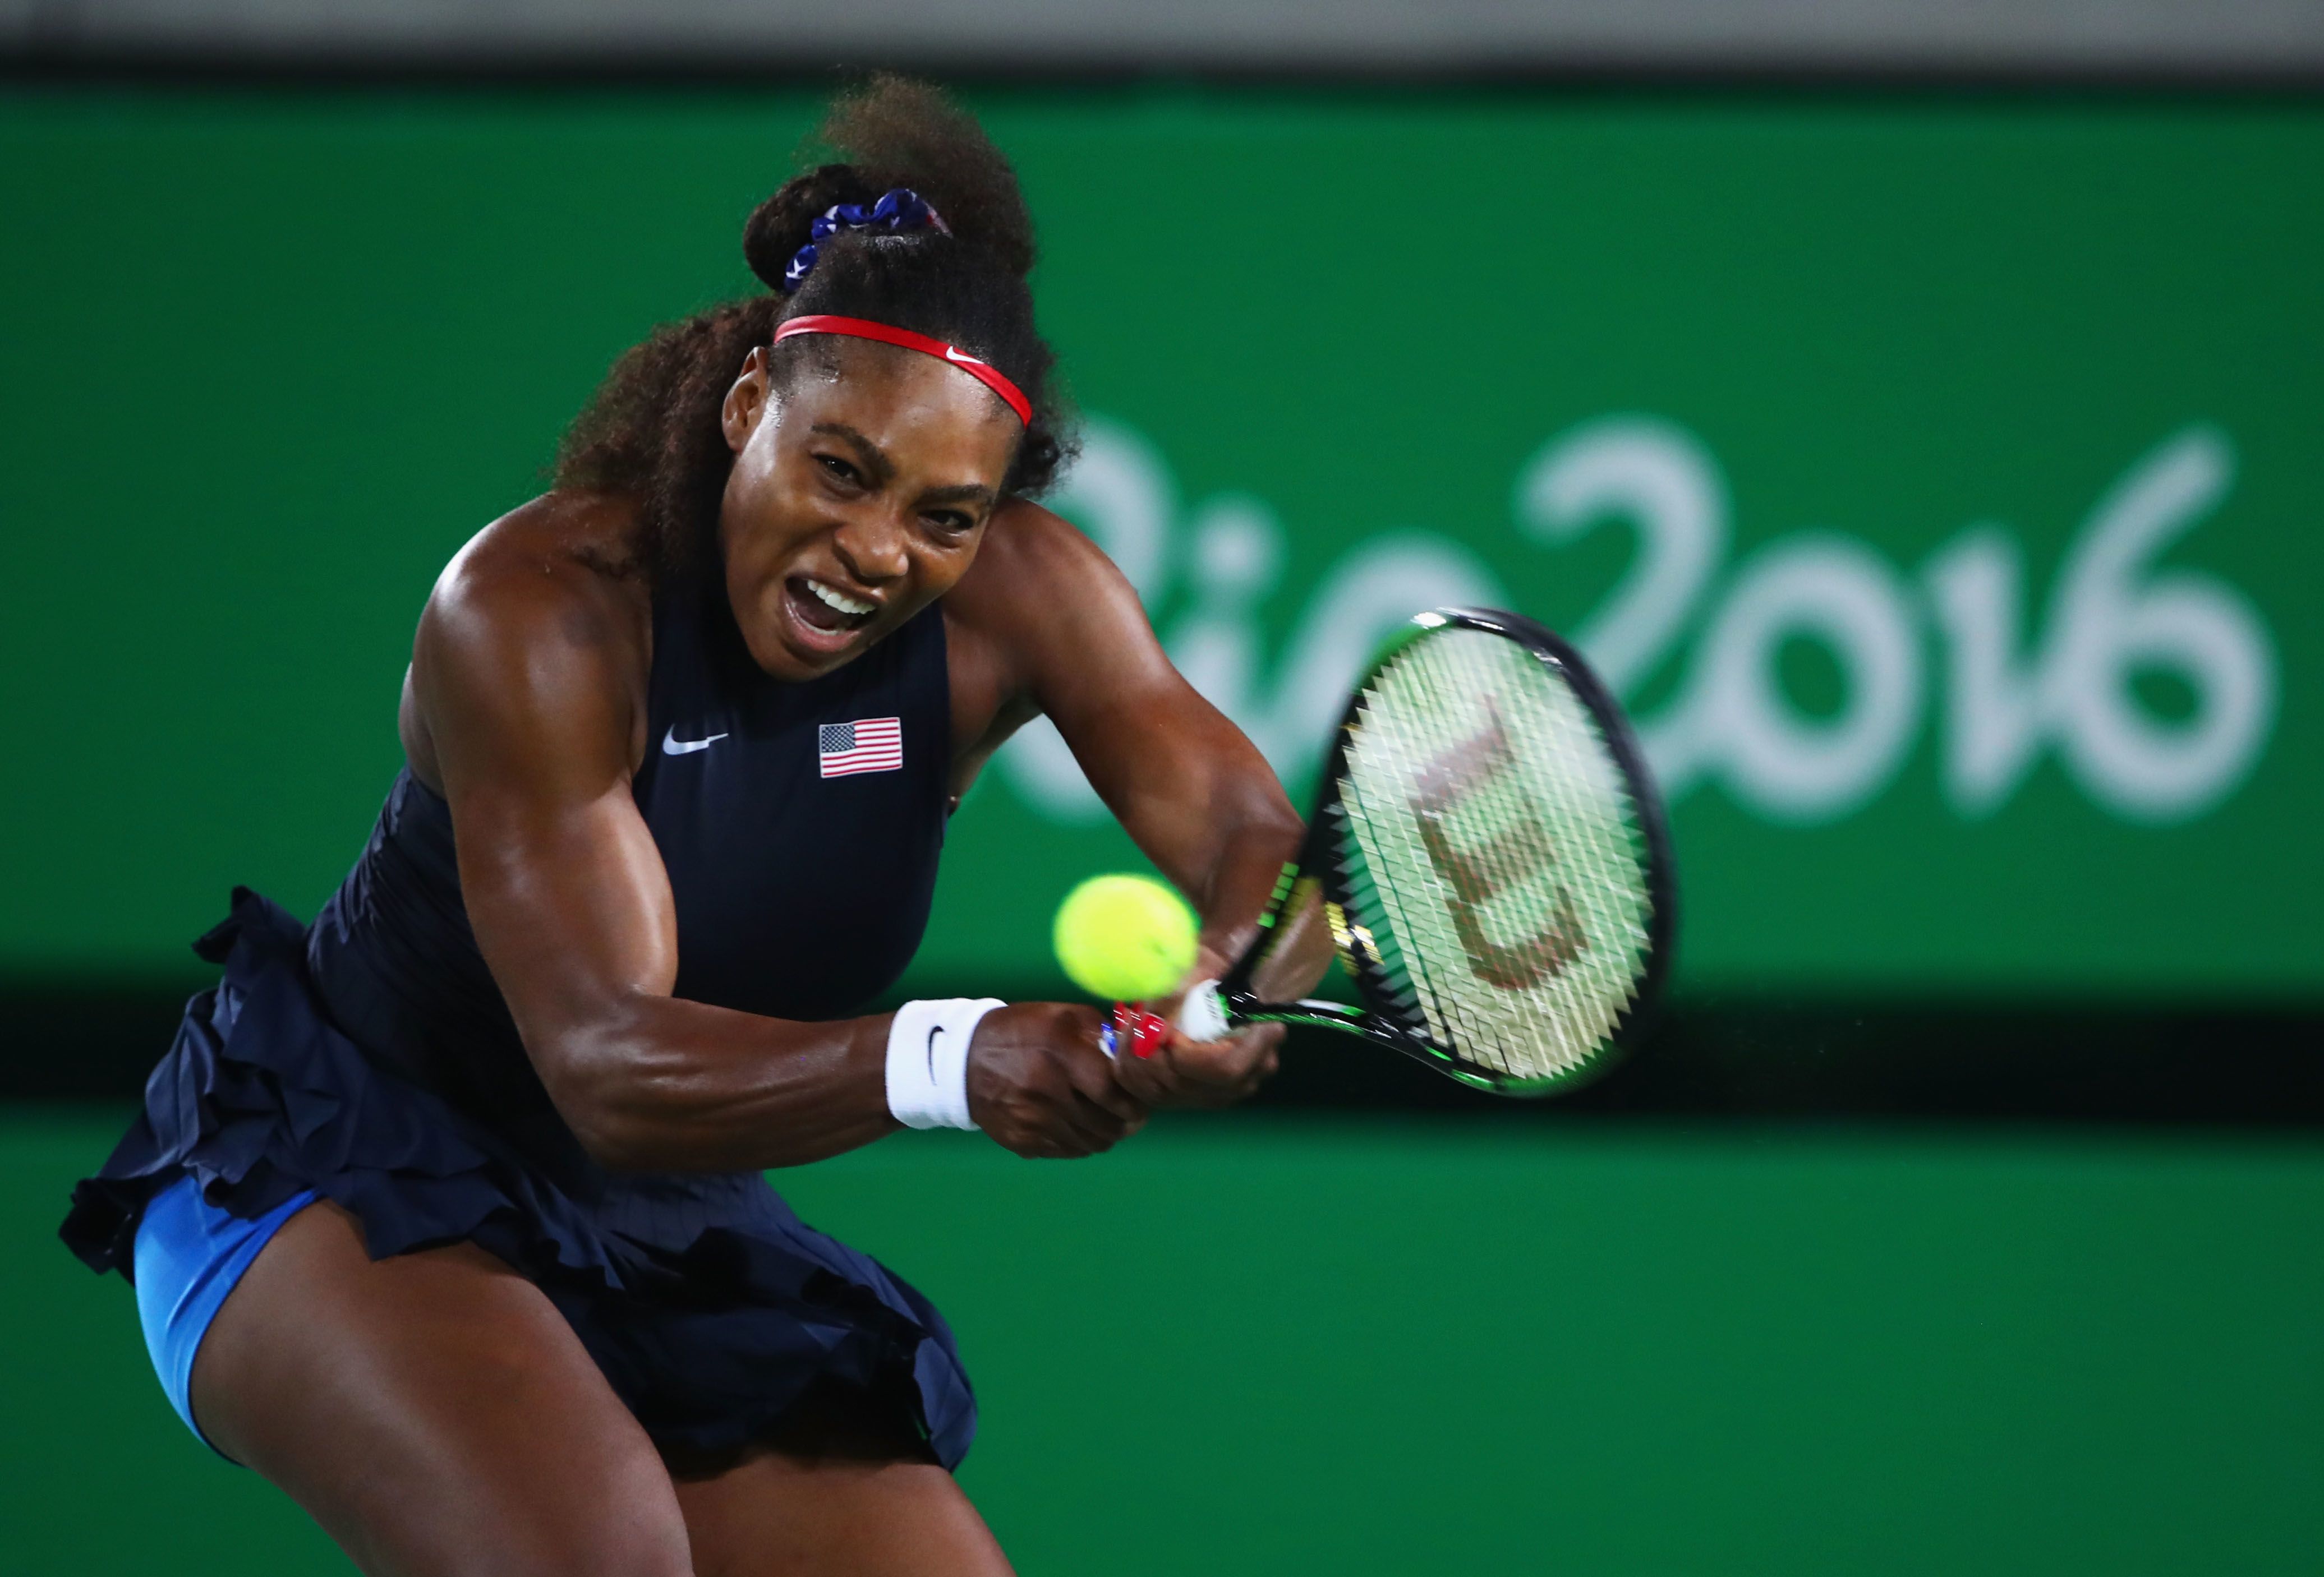 Valg Start Vild Serena Williams stunned by Elina Svitolina at Rio 2016 Olympics | CNN